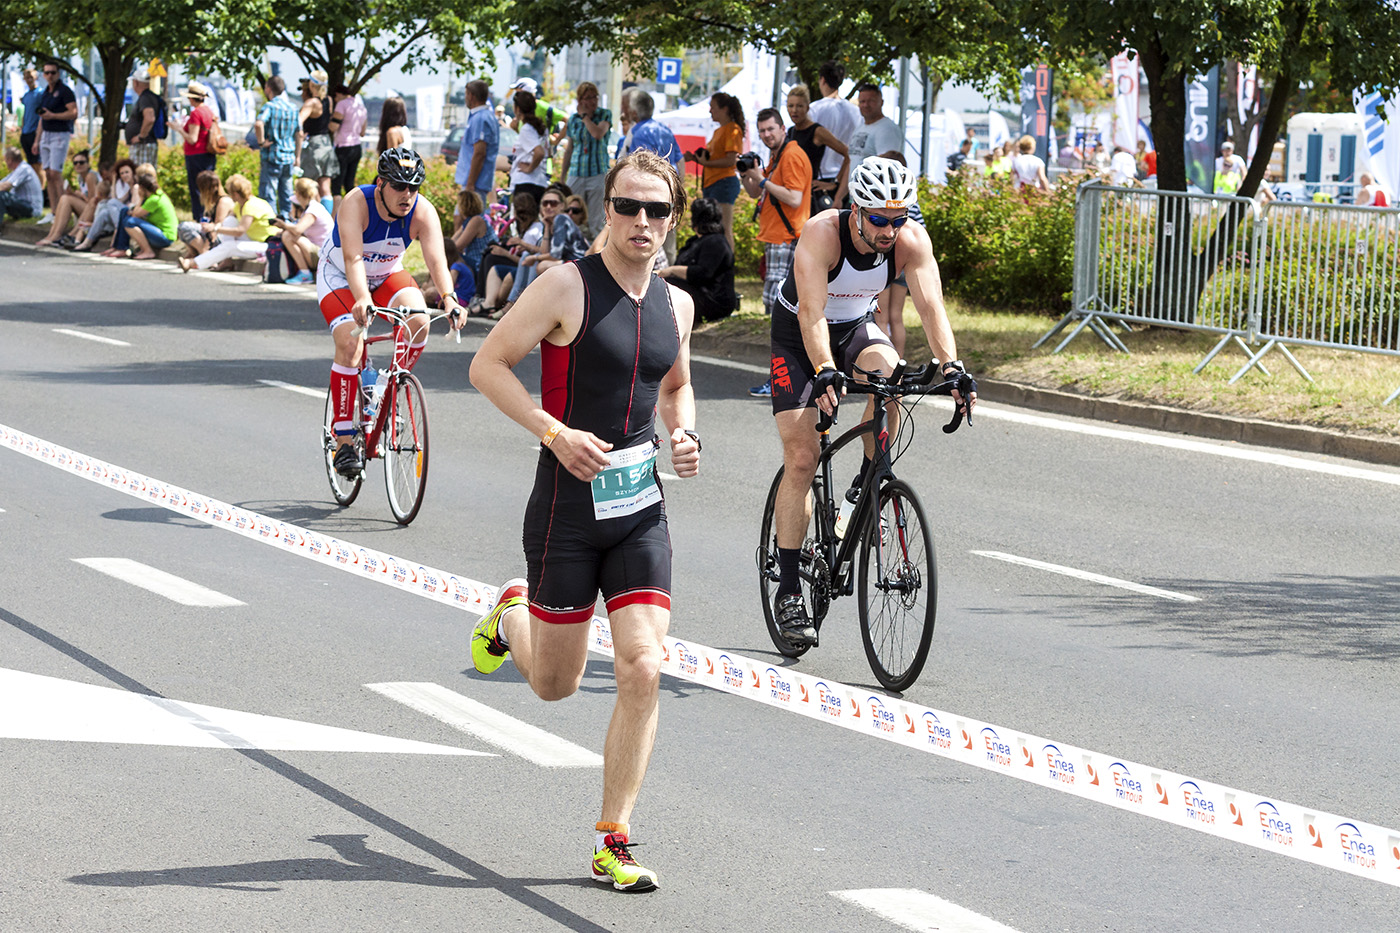 SZCZECIN, POLAND - JULY 06, 2014: Runner and cyclists during fir